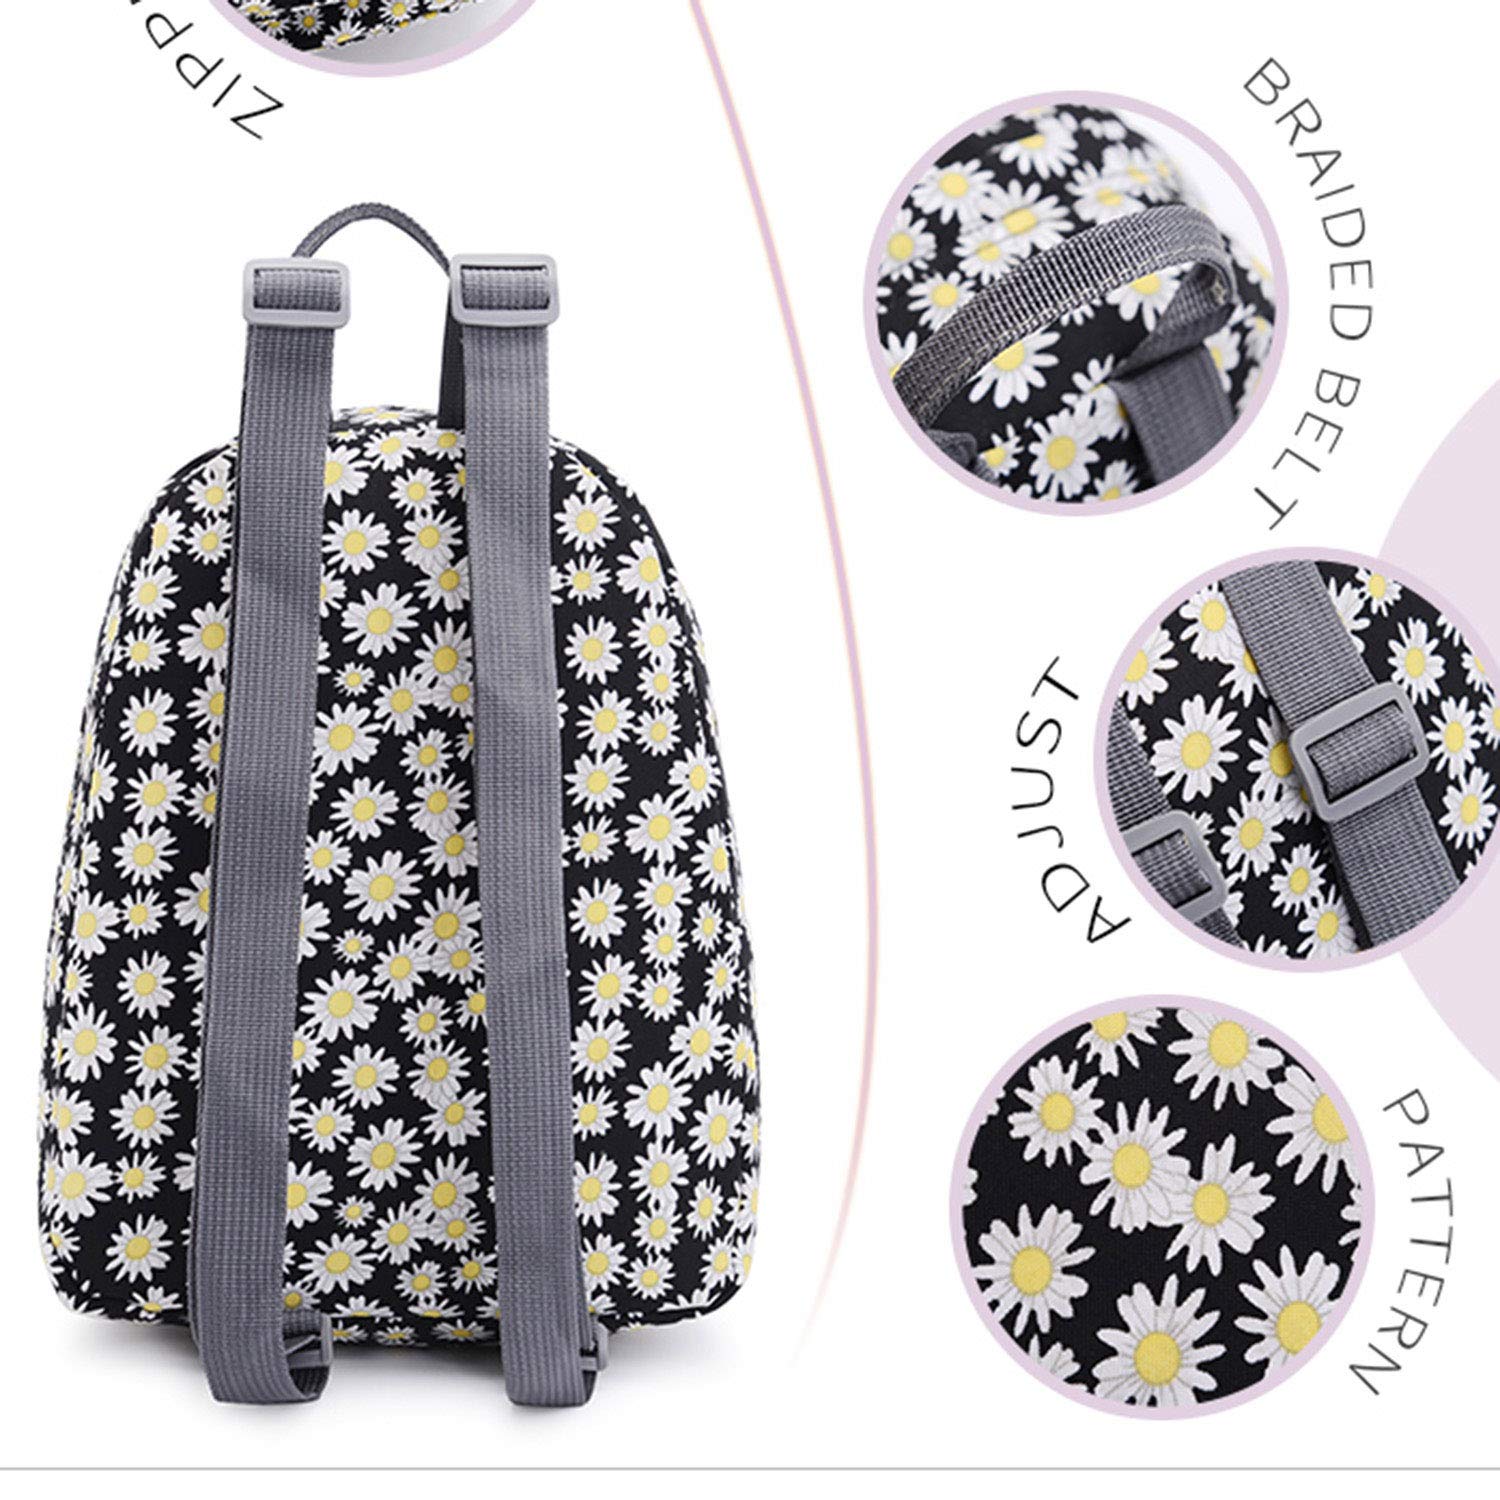 Bravo Mini Backpack, Beautiful 11